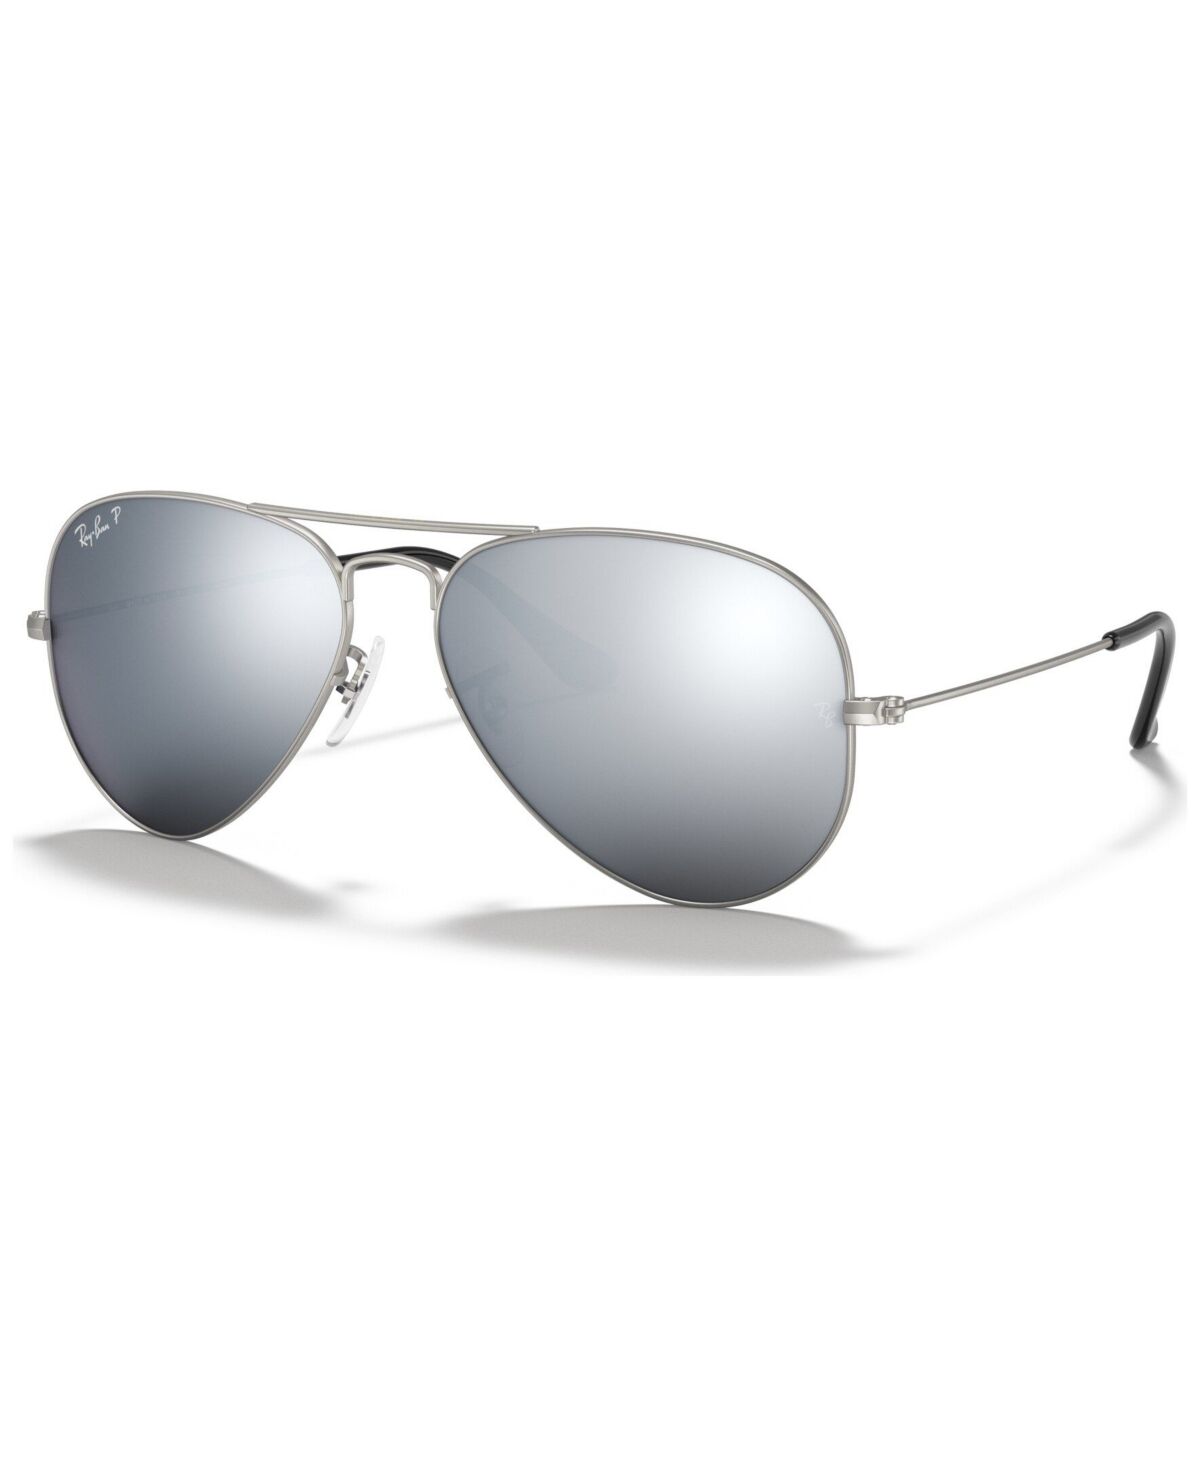 Ray-Ban Polarized Sunglasses, RB3025 Aviator Mirror - SILVER